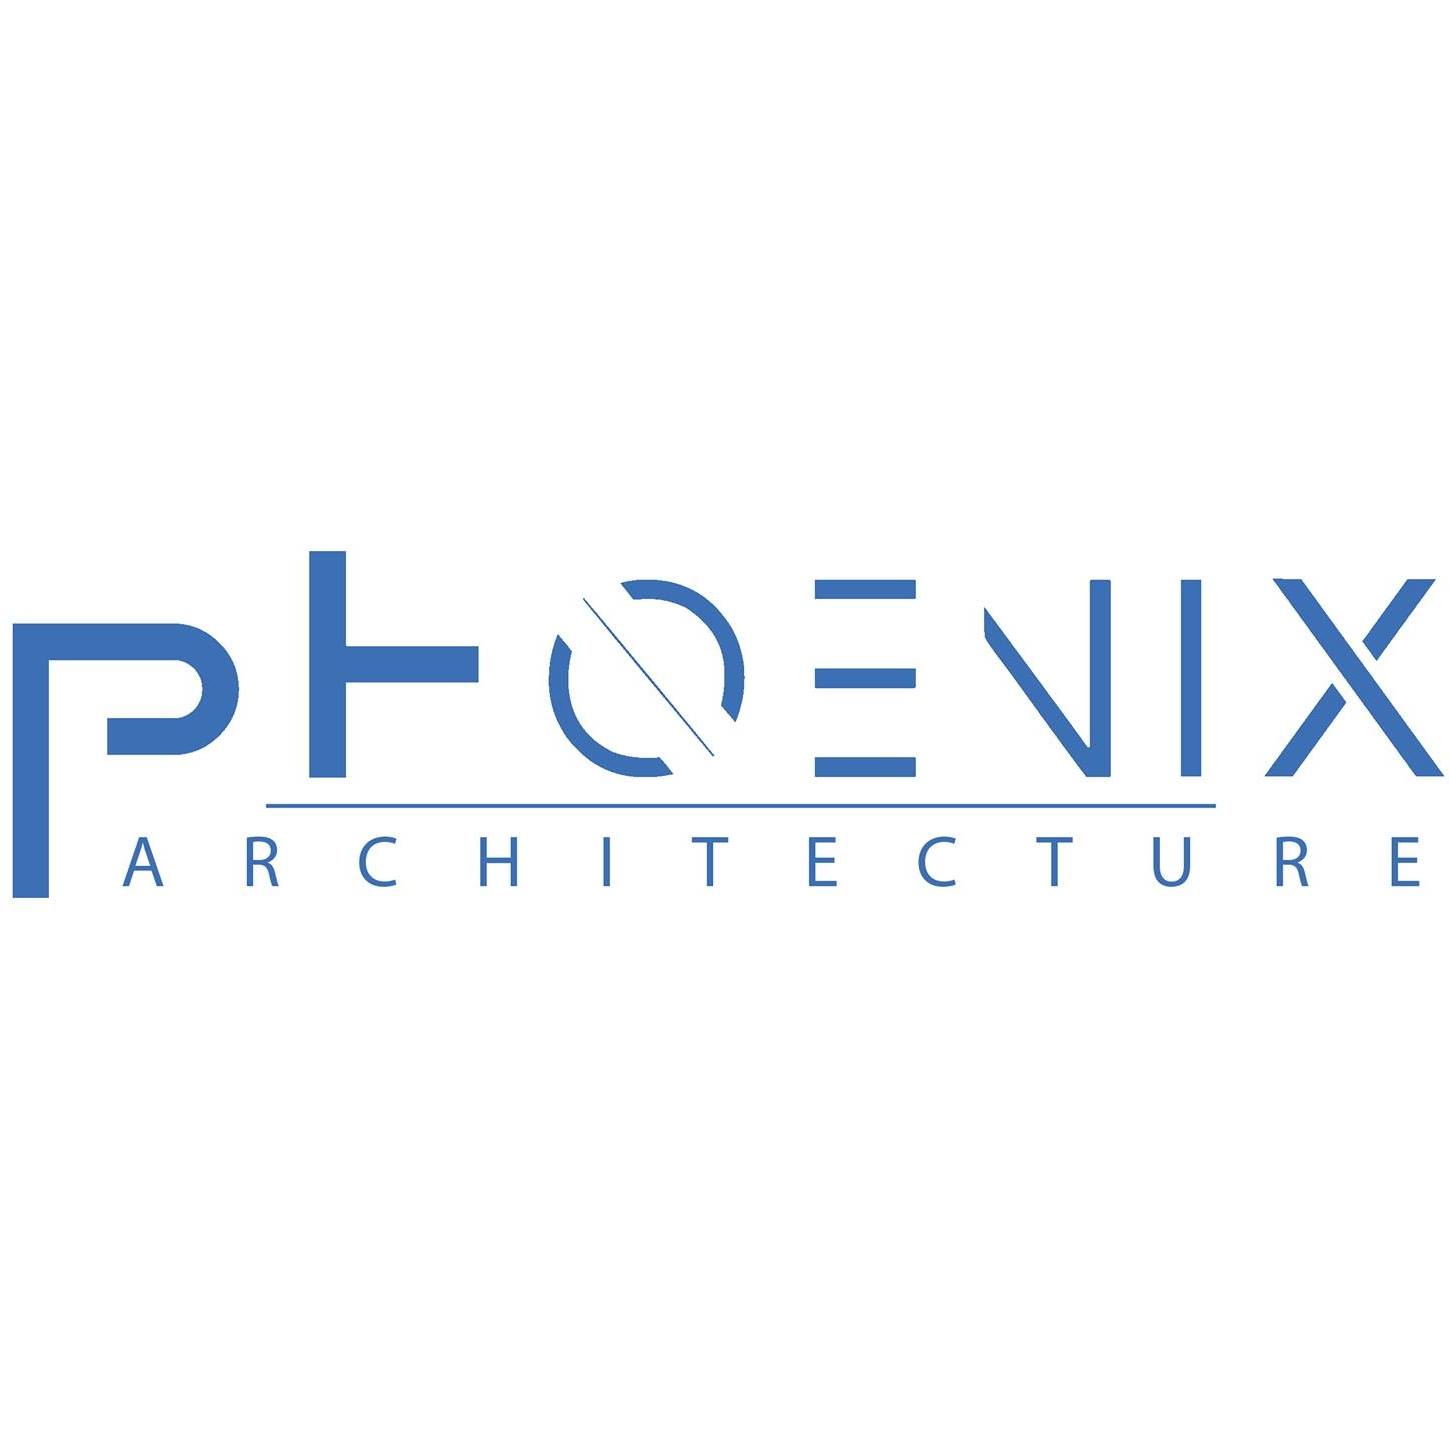 PHOENIX ARCHITECTURE|Architect|Professional Services